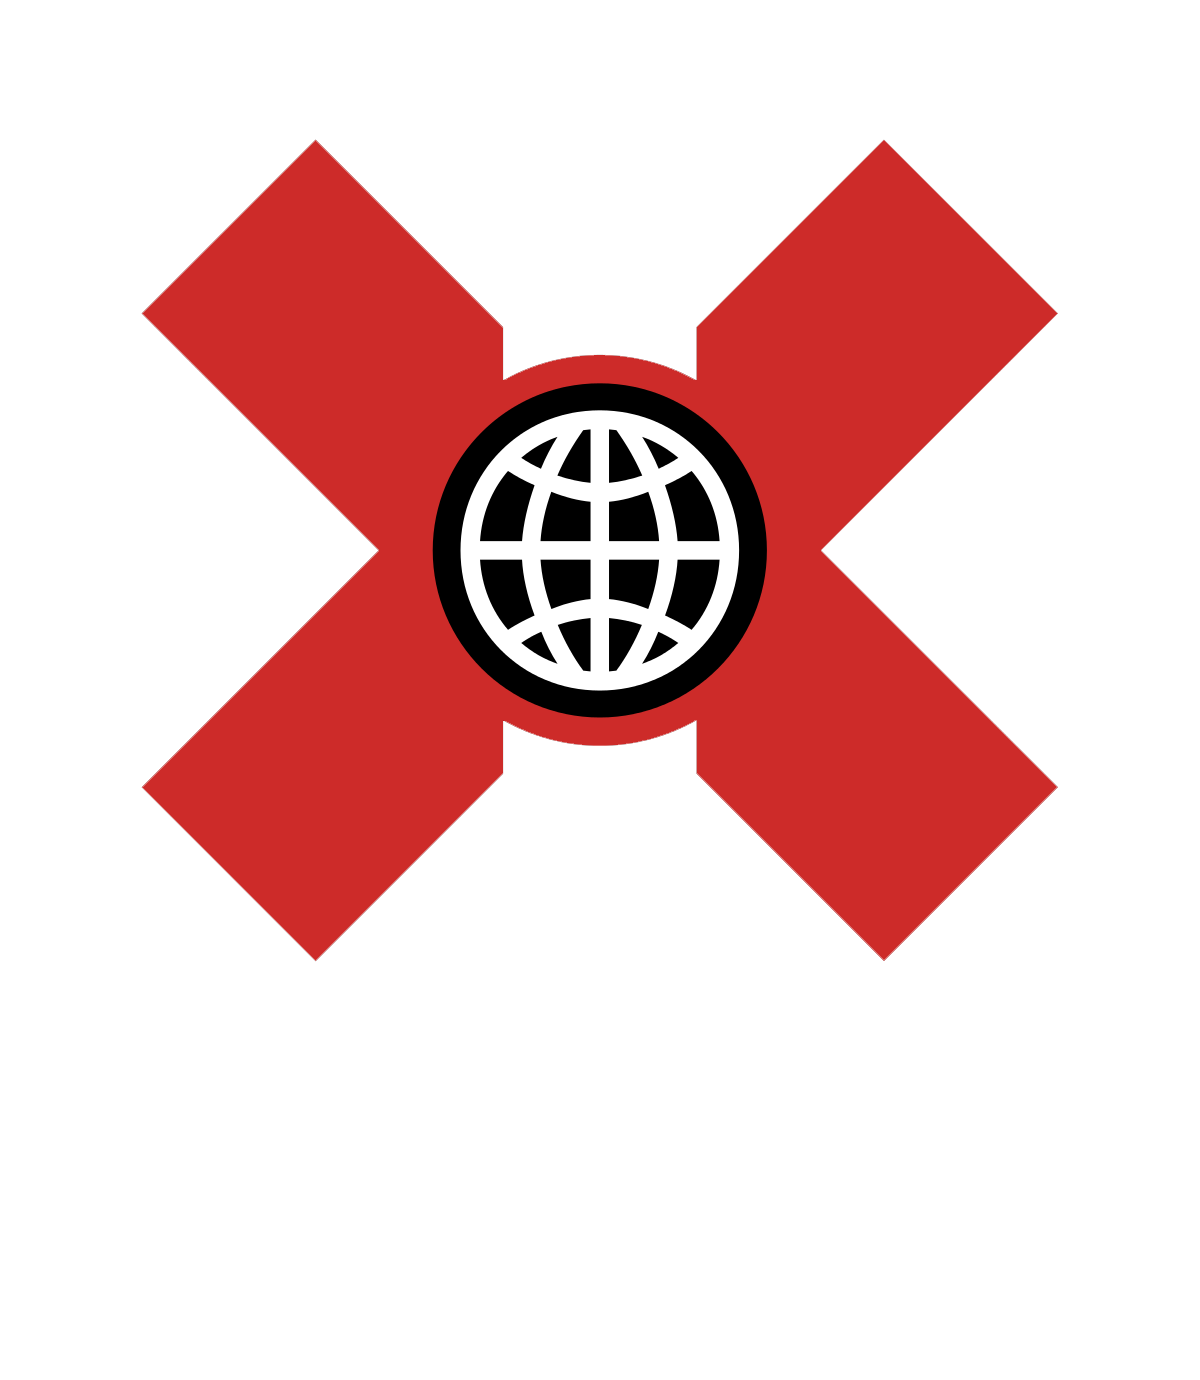 Сайт x game. Логотип игры x games. Символ xgames. Эмблема ХХ. Gaming x лого.